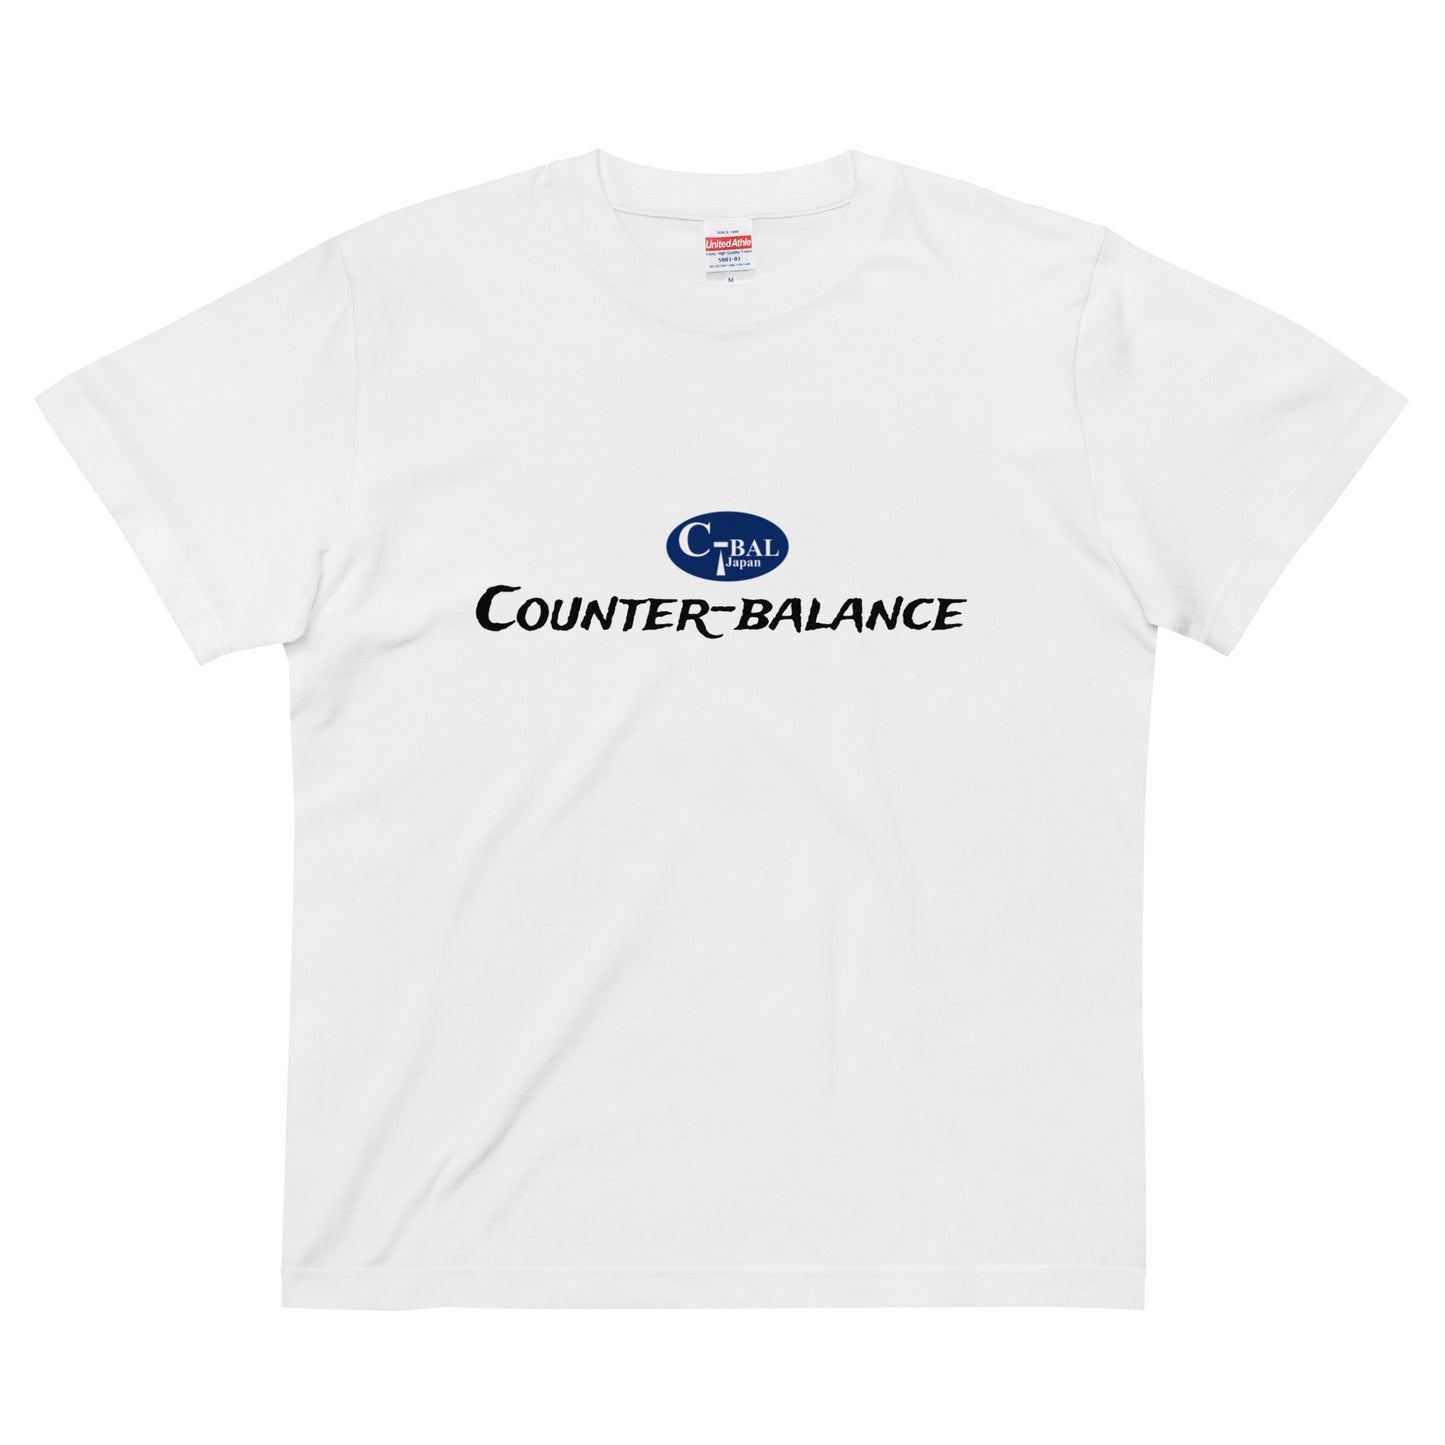 A001 - 高品質純棉T恤（C-BAL : White / Navy）